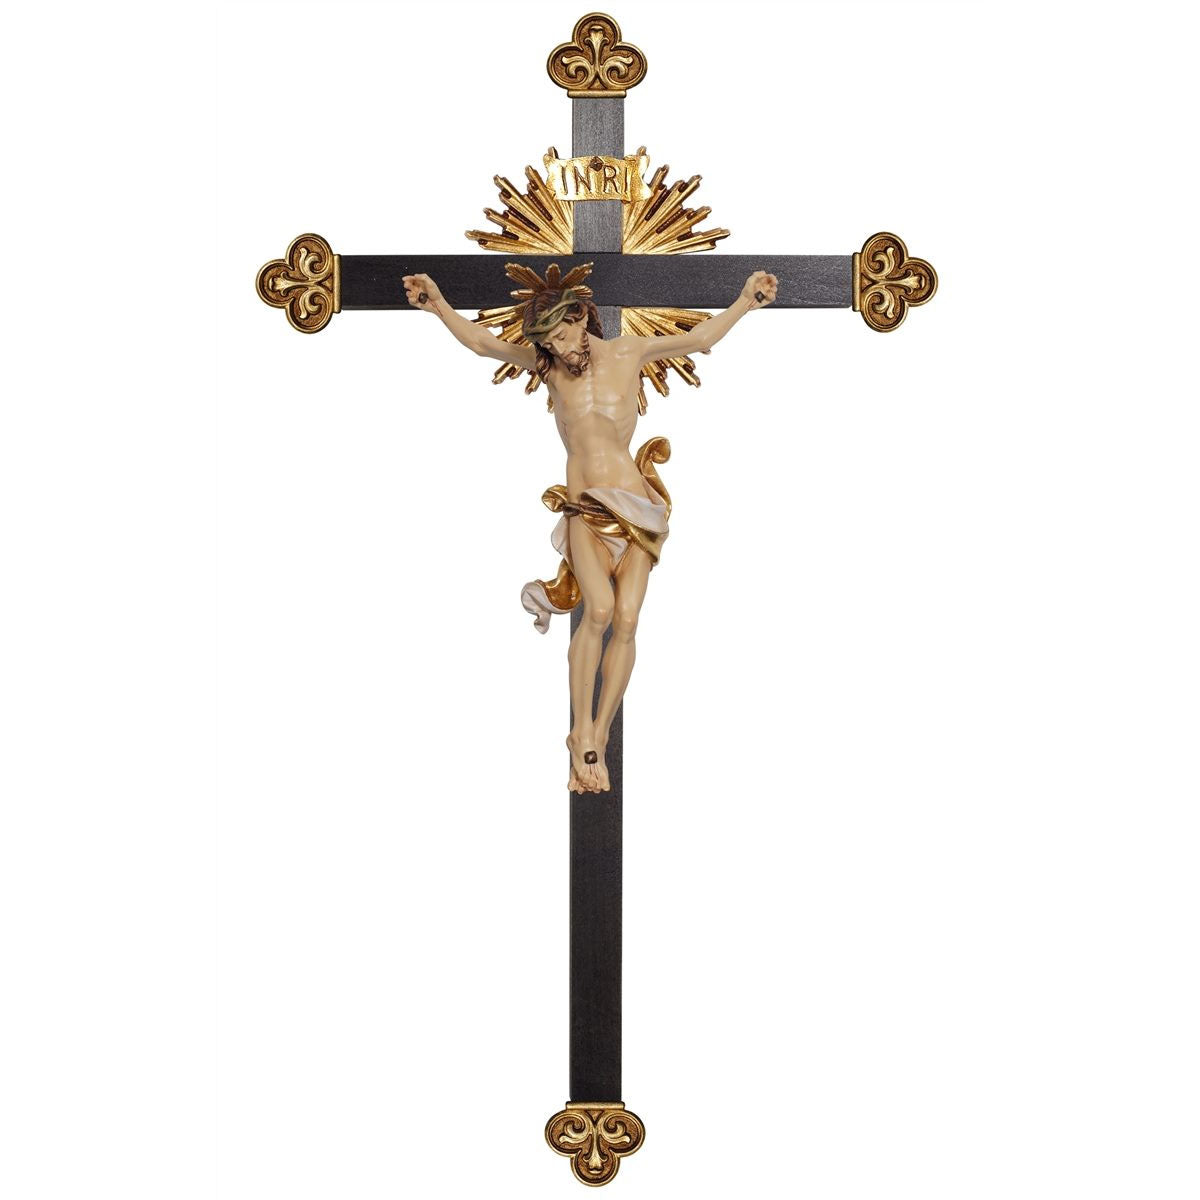 Wood Carved Crucifix | Leonardo Baroque